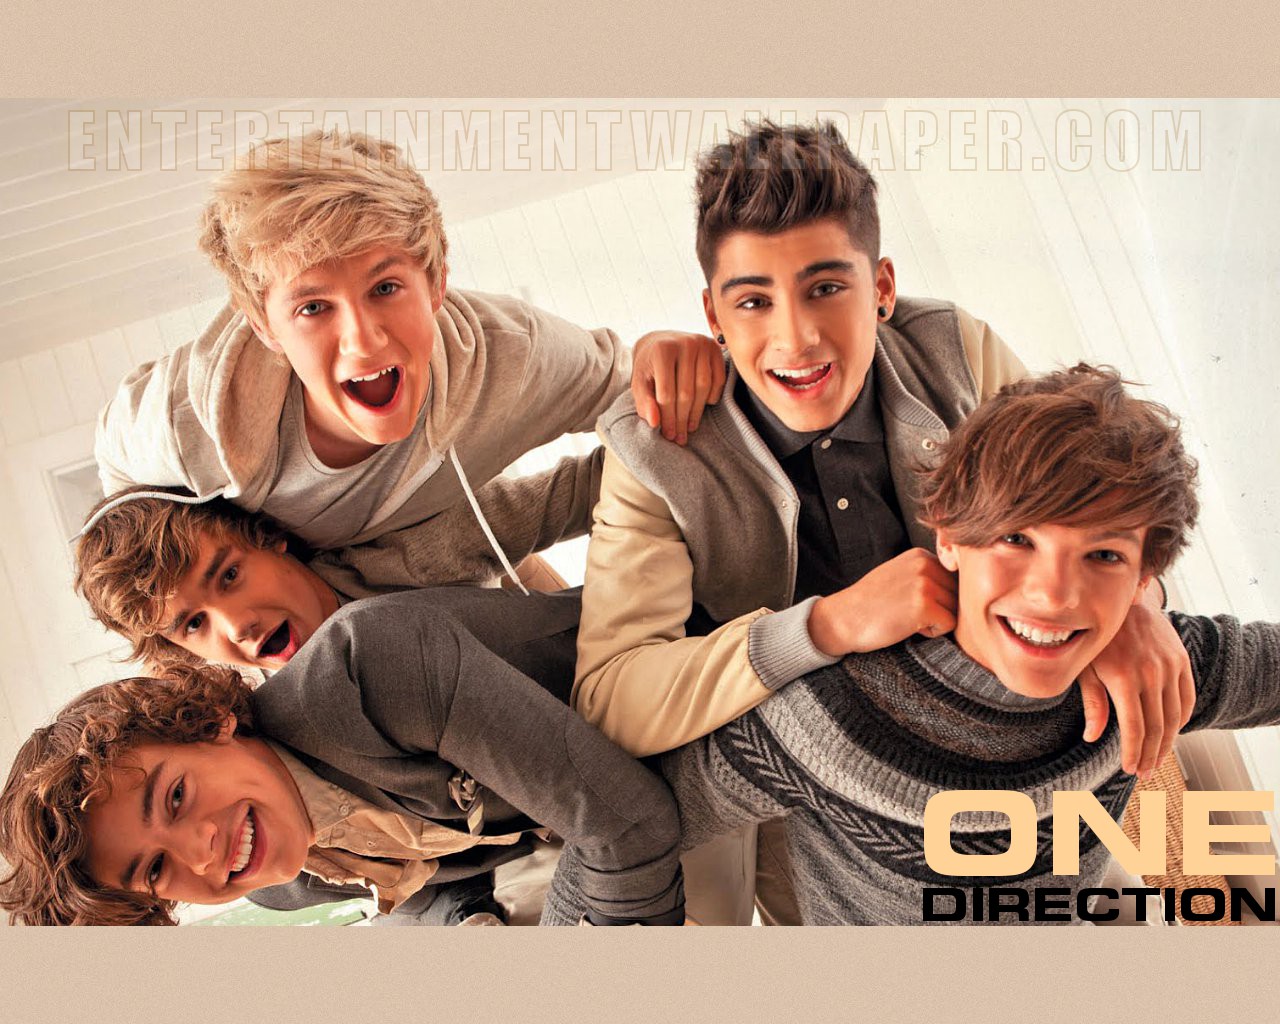 One Direction Wallpaper Desktop